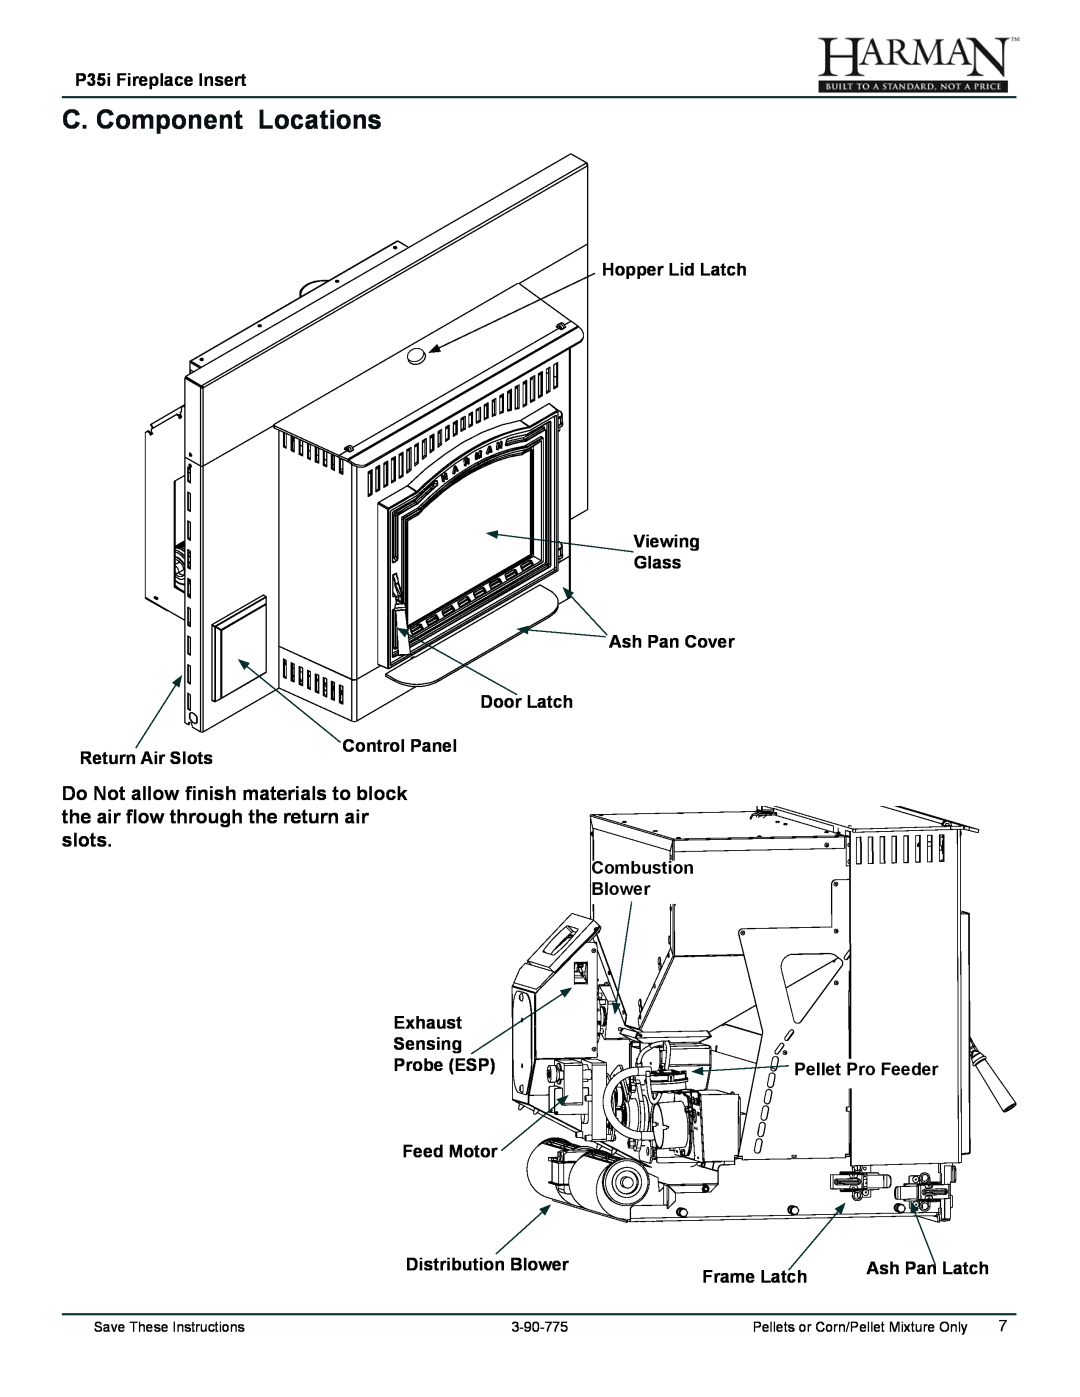 Harman Stove Company P35I C. Component Locations, P35i Fireplace Insert, Hopper Lid Latch, Glass, Ash Pan Cover Door Latch 